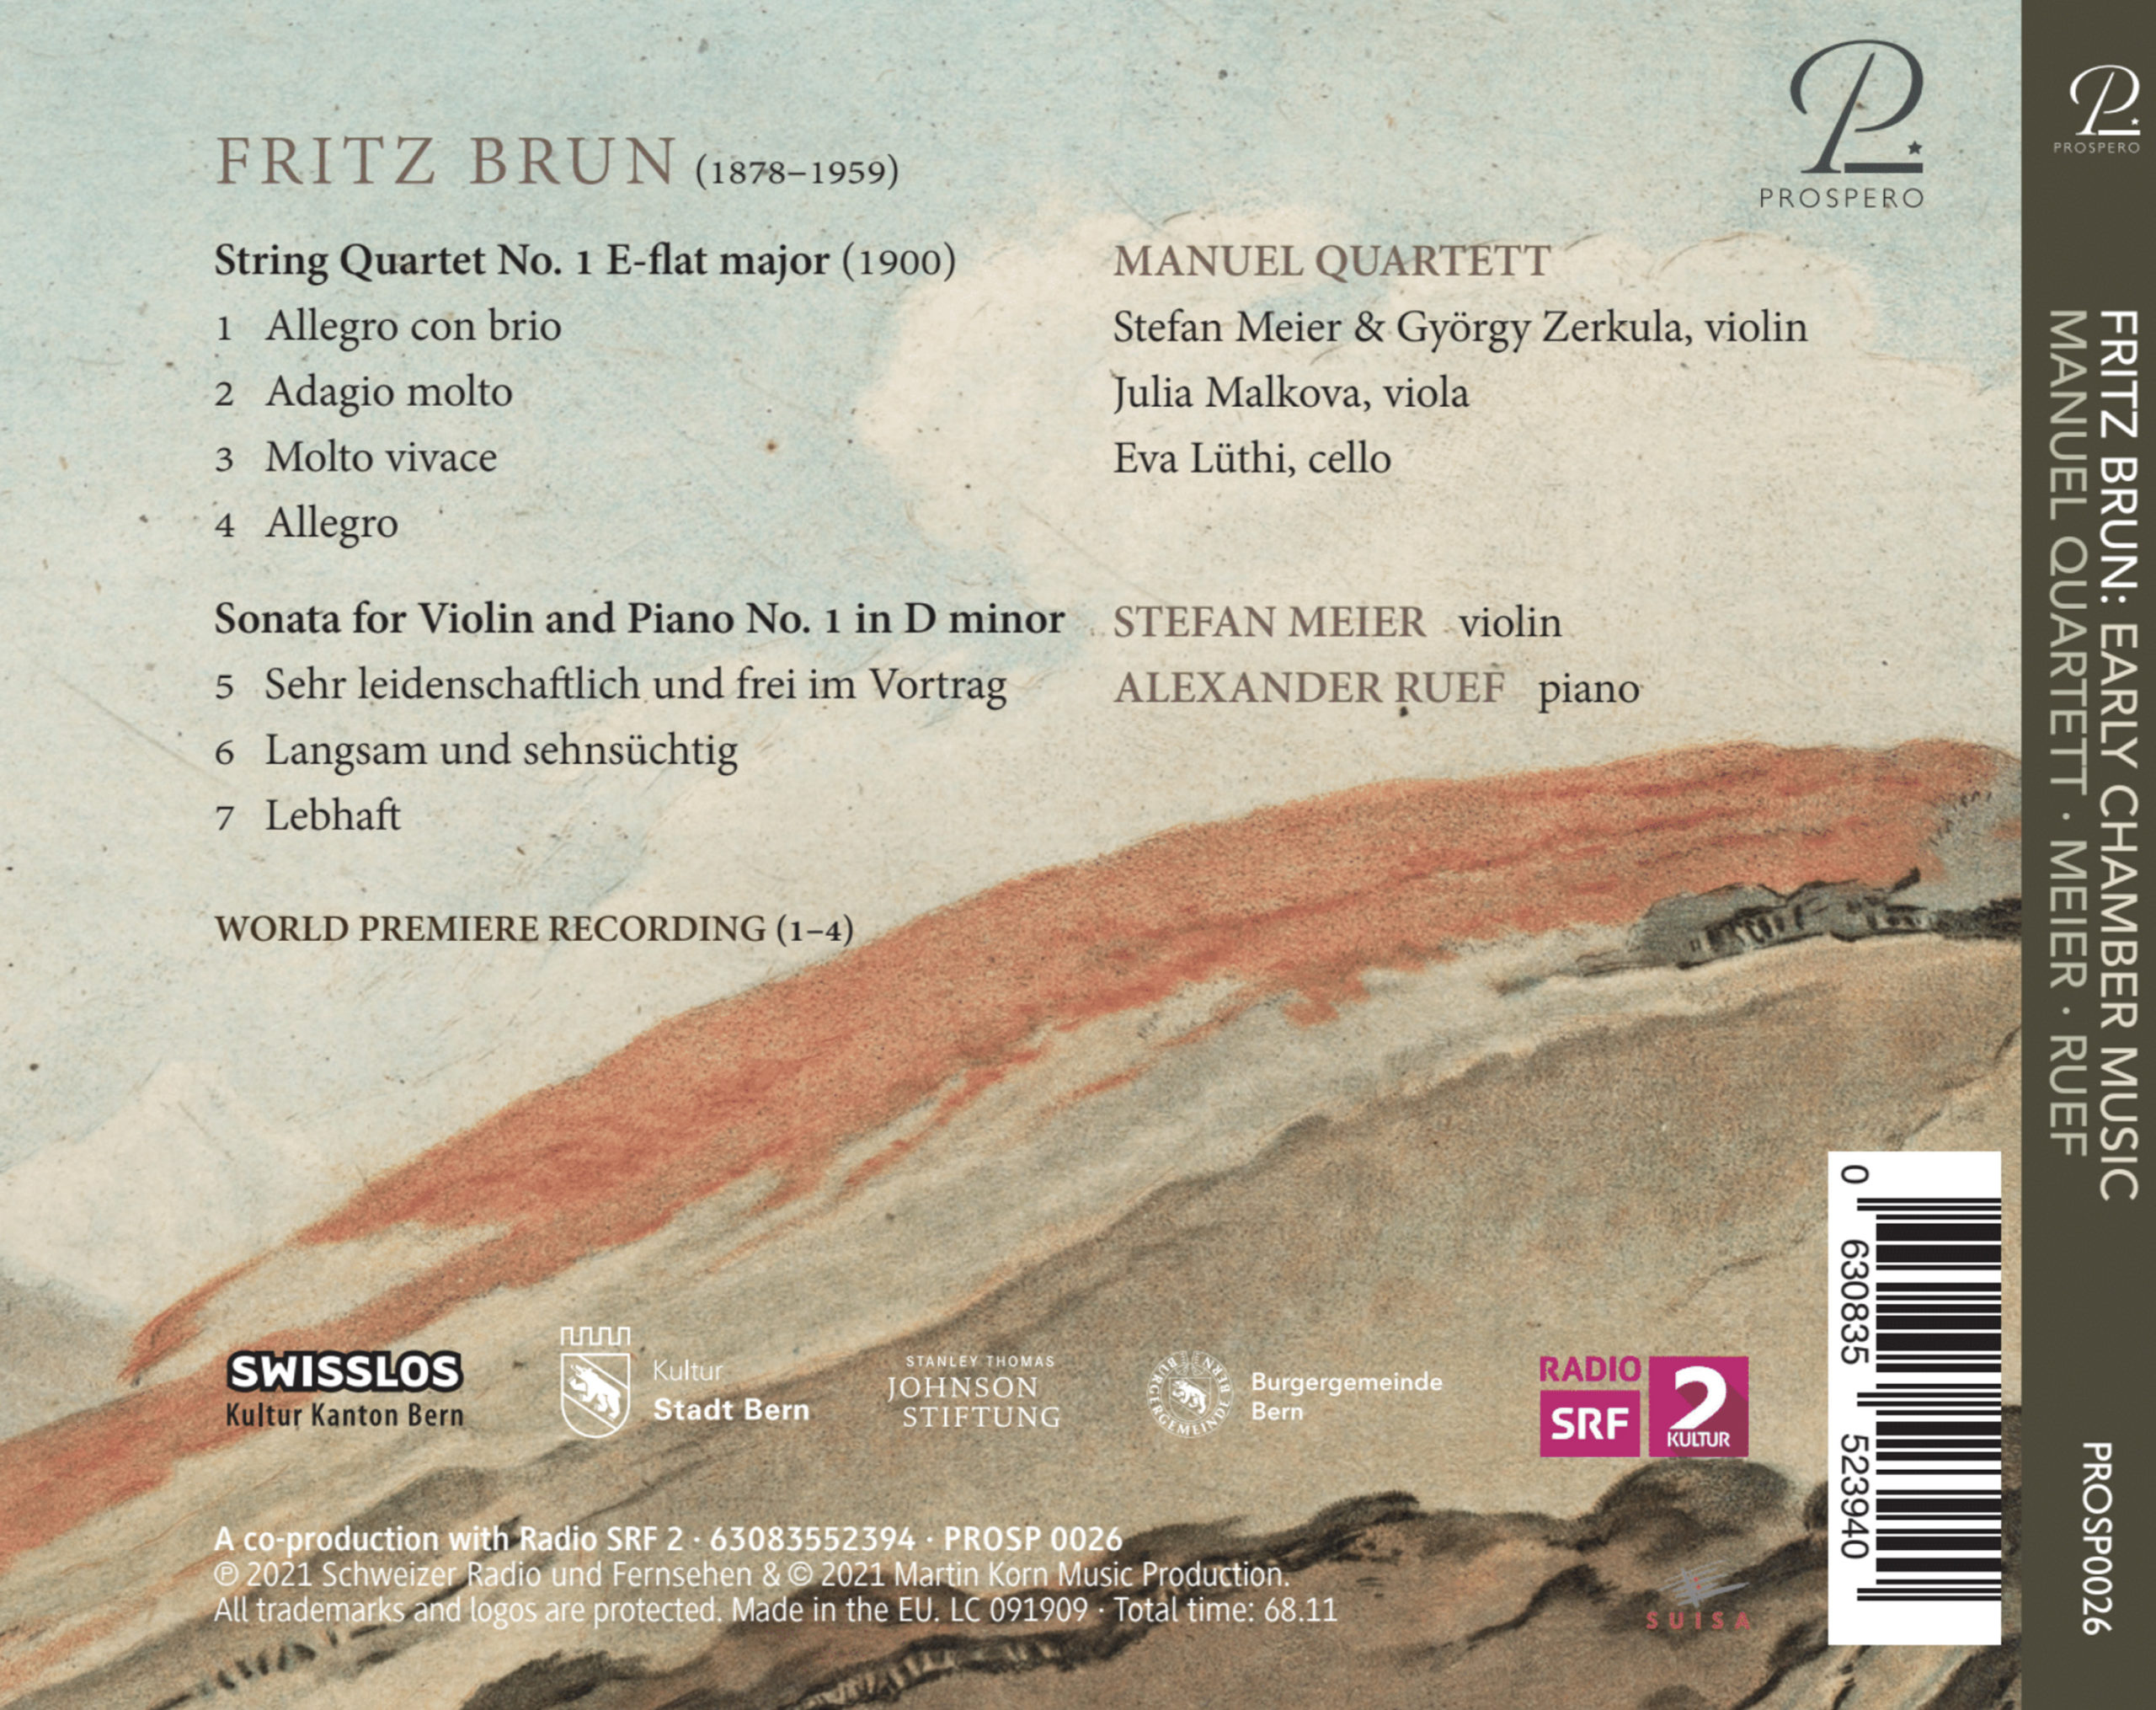 Fritz Brun - Digipack Back